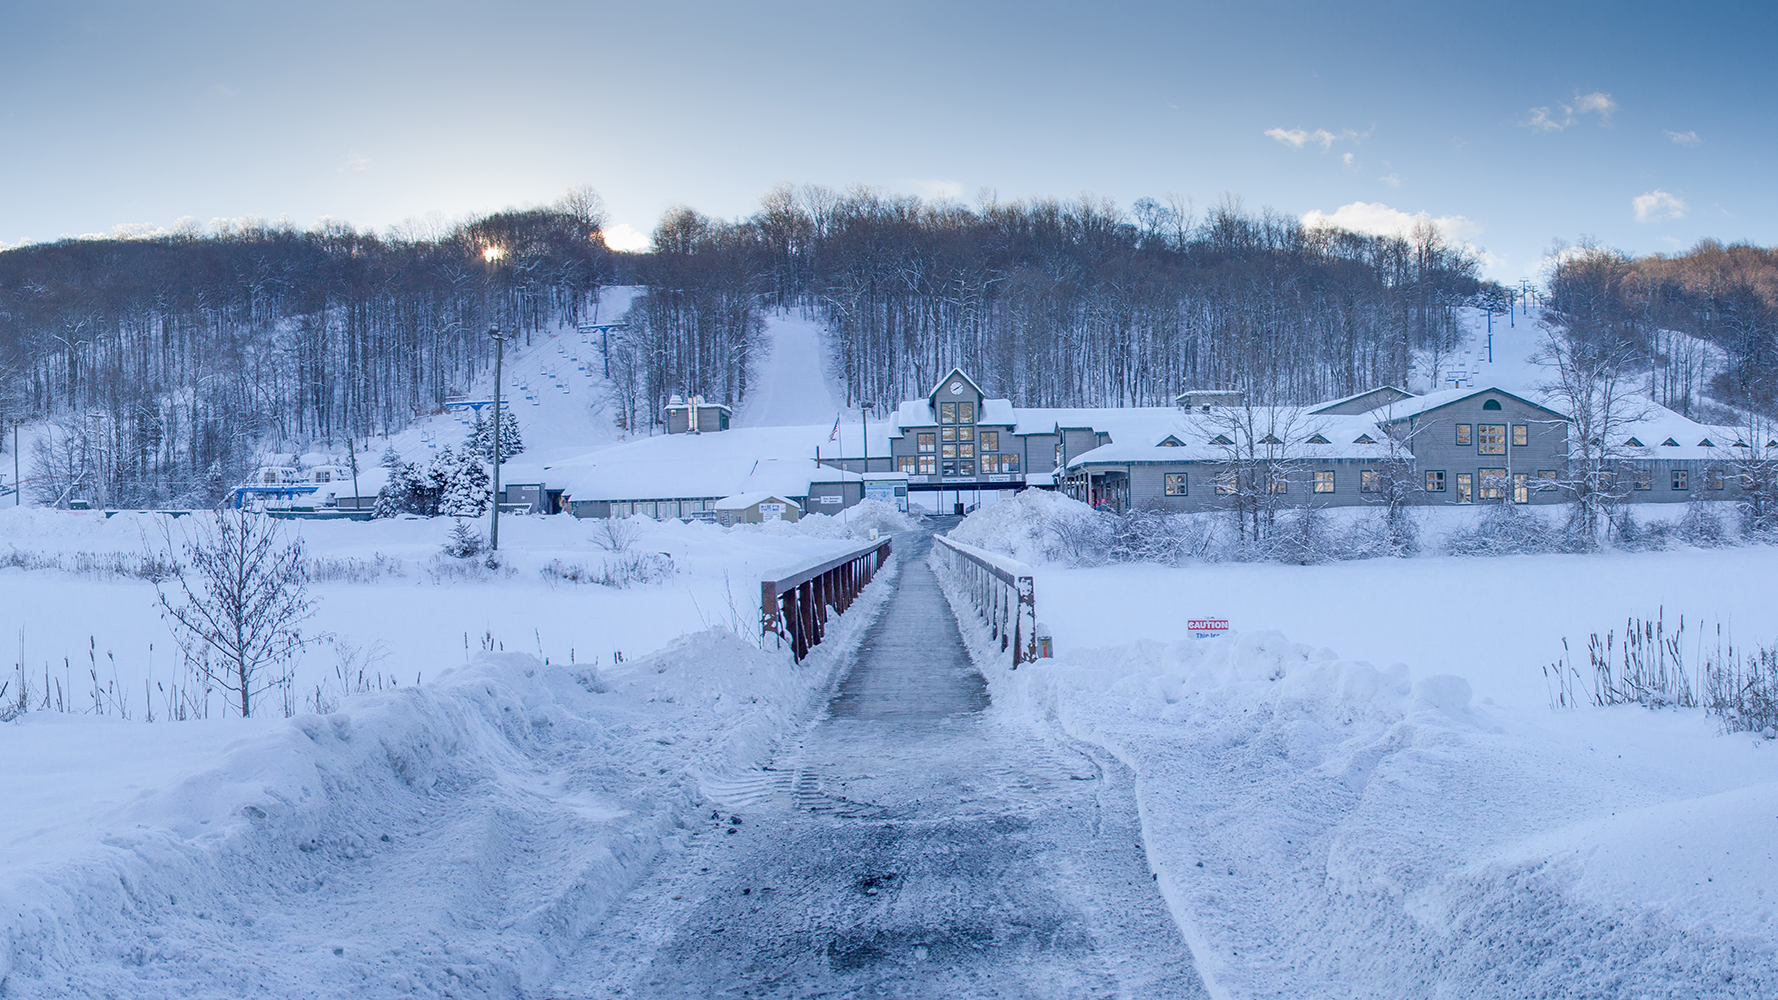 Snowy landscape shot of Shawnee Mountain ski resort